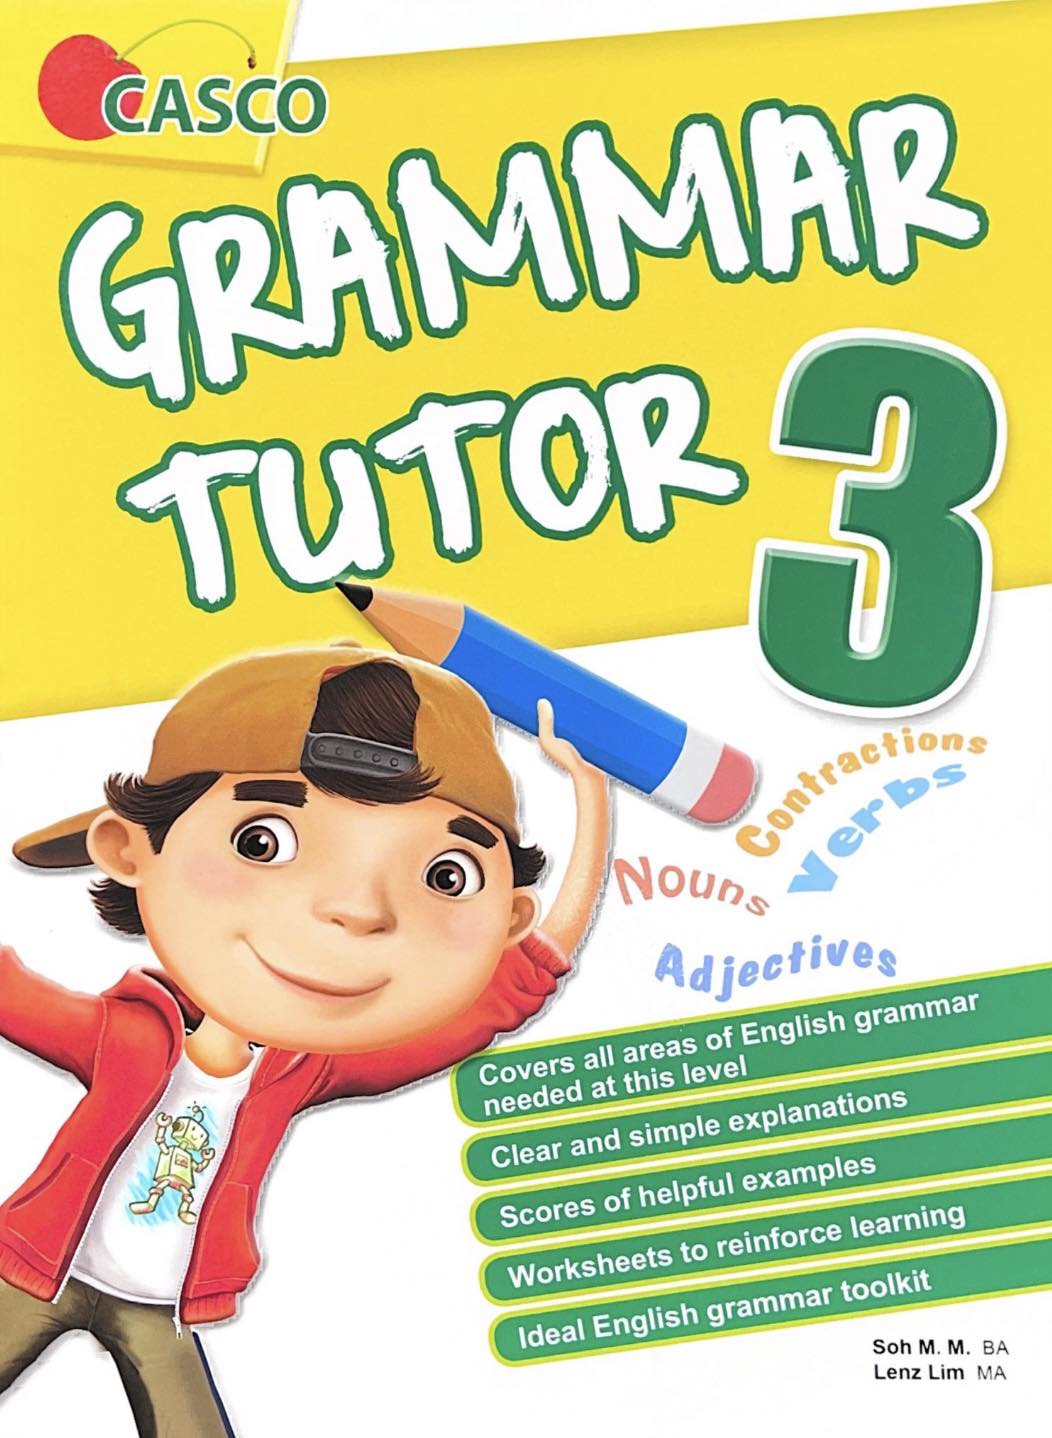 Grammar Tutor for Primary Levels